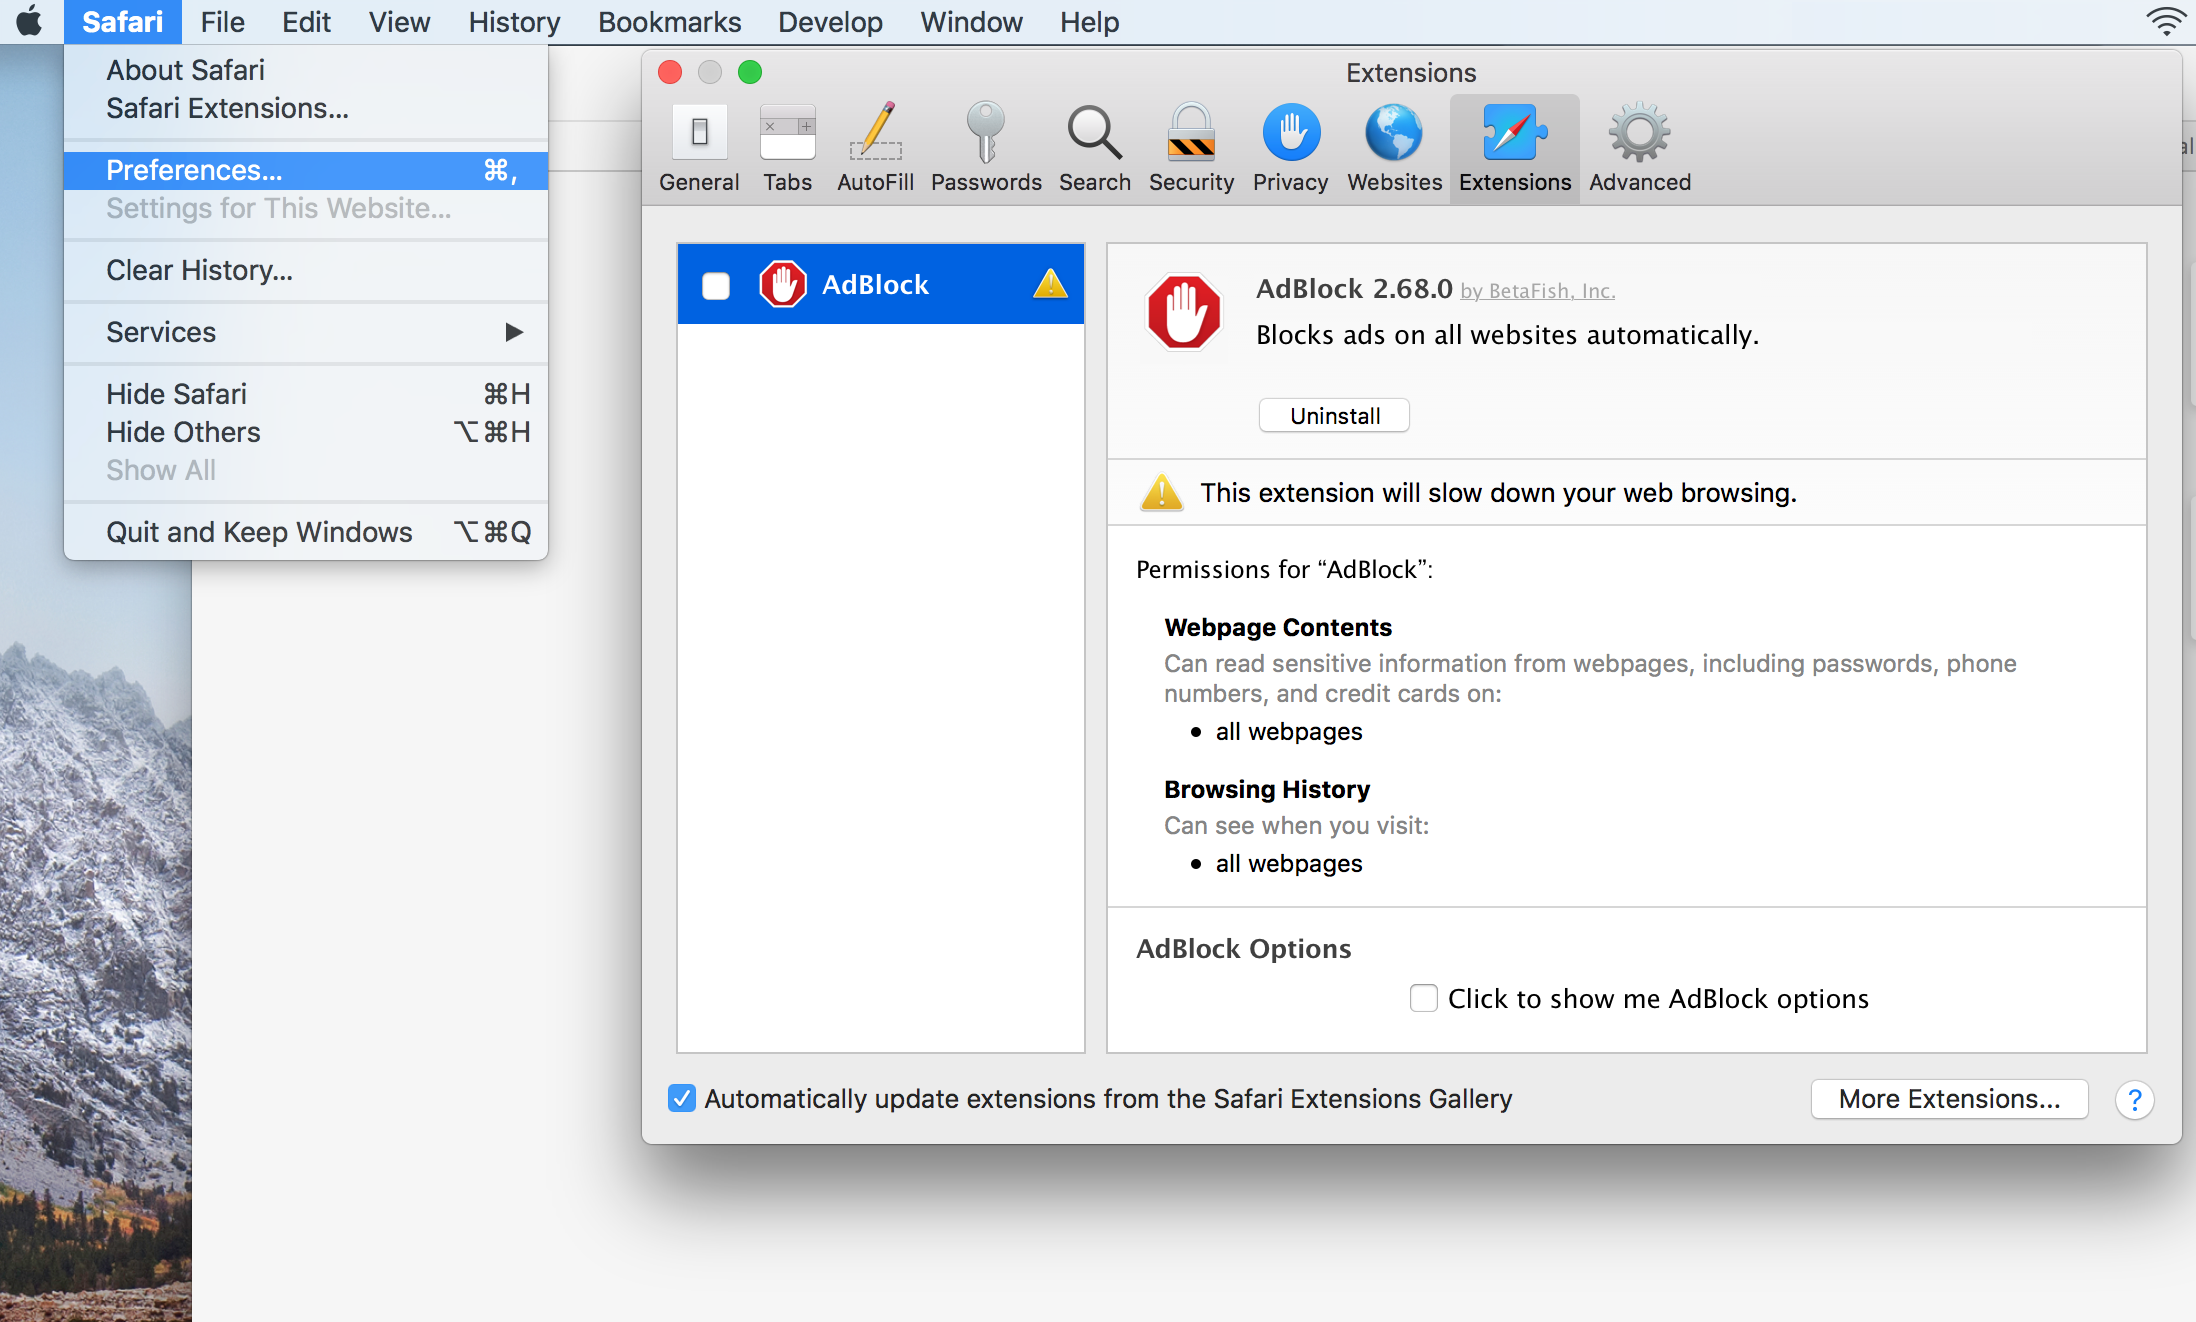 mac app blocker torrent and crack